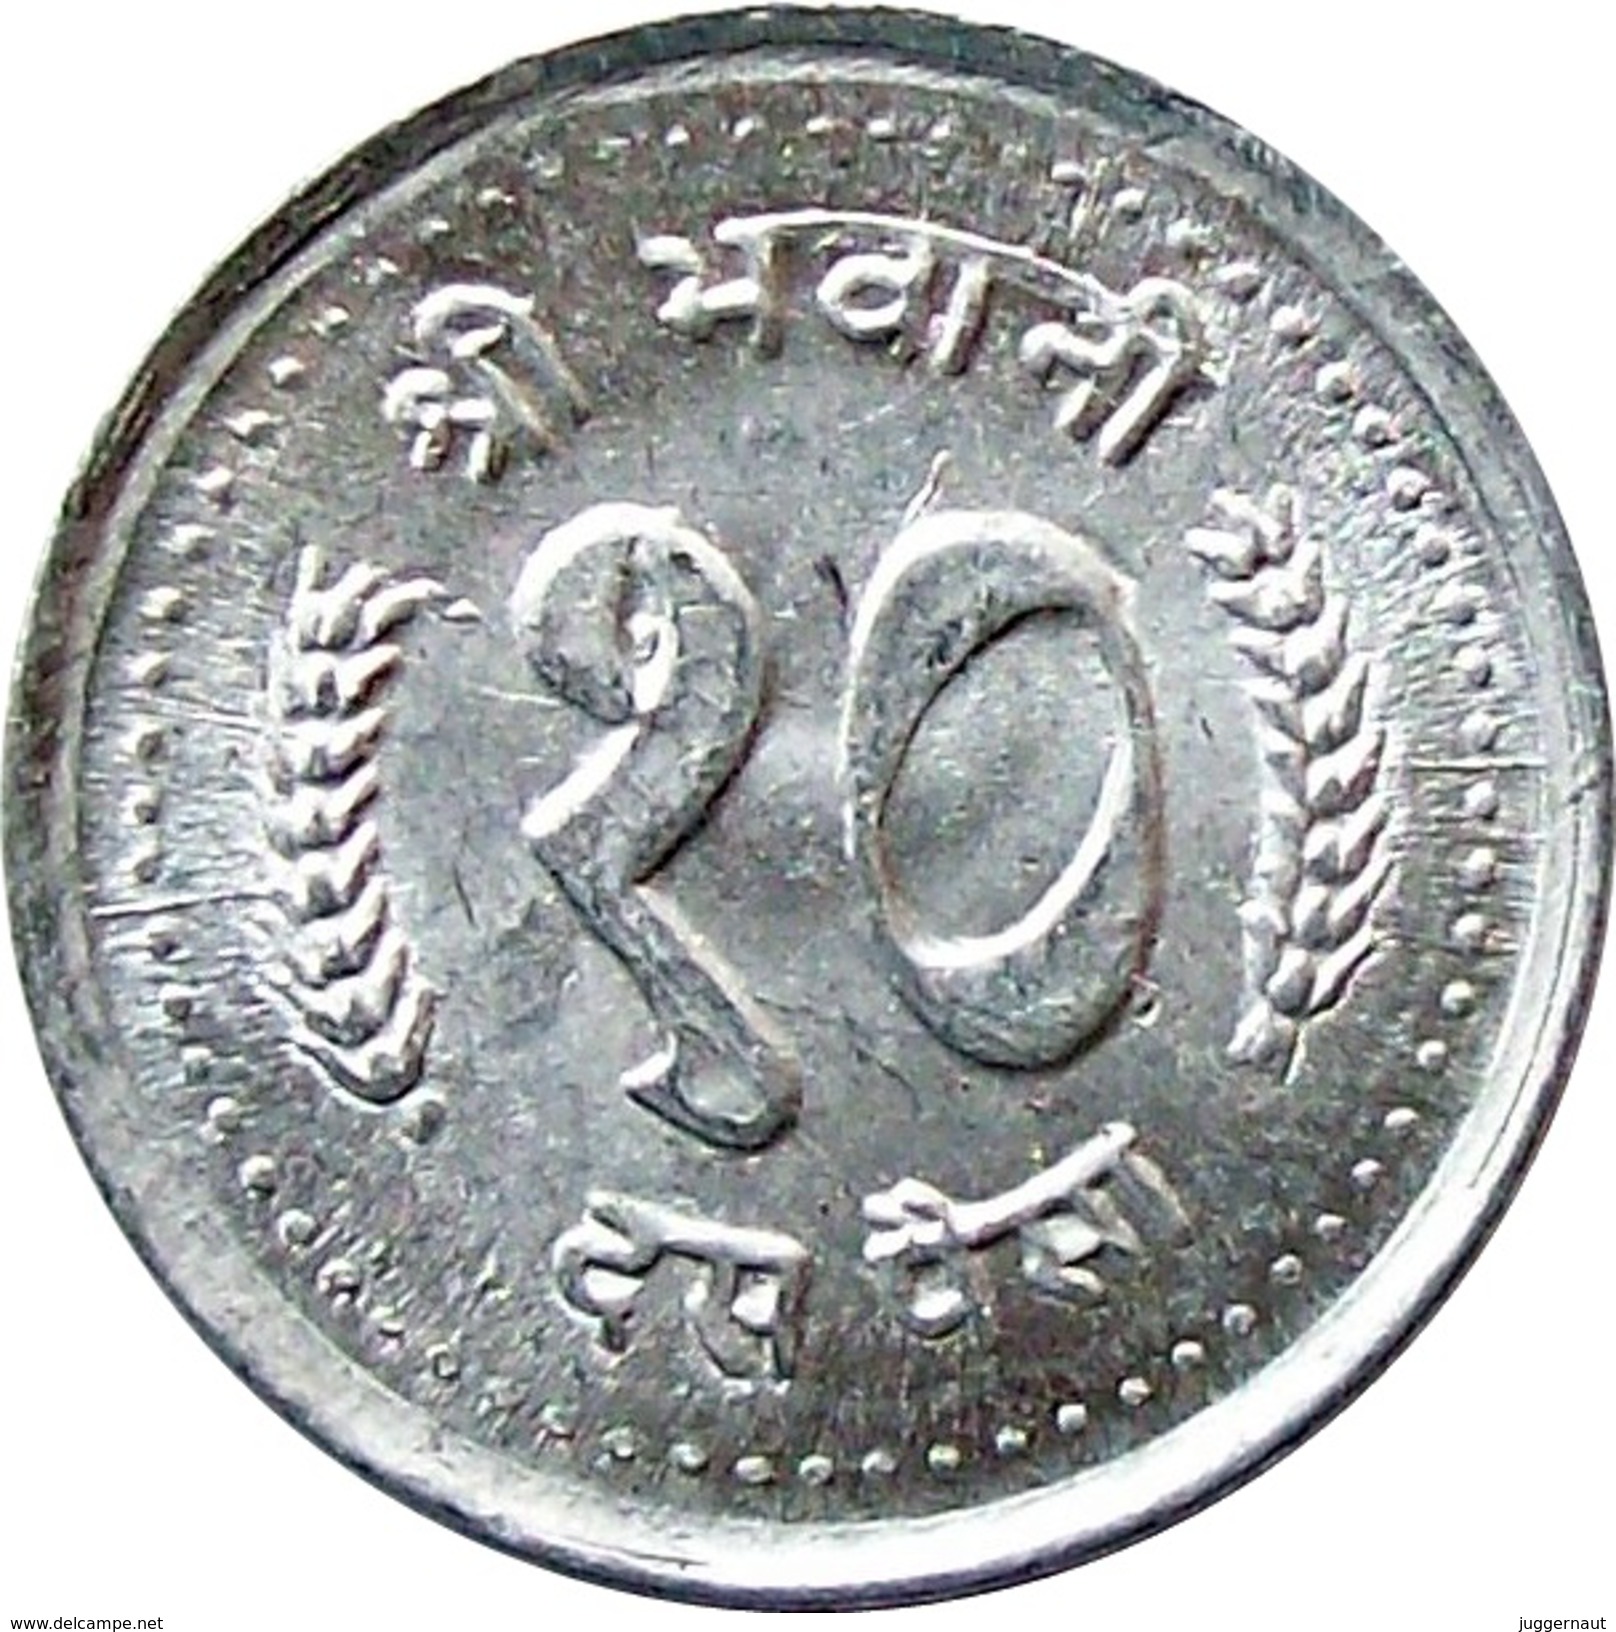 NEPAL 10 PAISA ALLUMINUM COIN 1984-93 KM-1014.2 UNCIRCULATED UNC - Népal